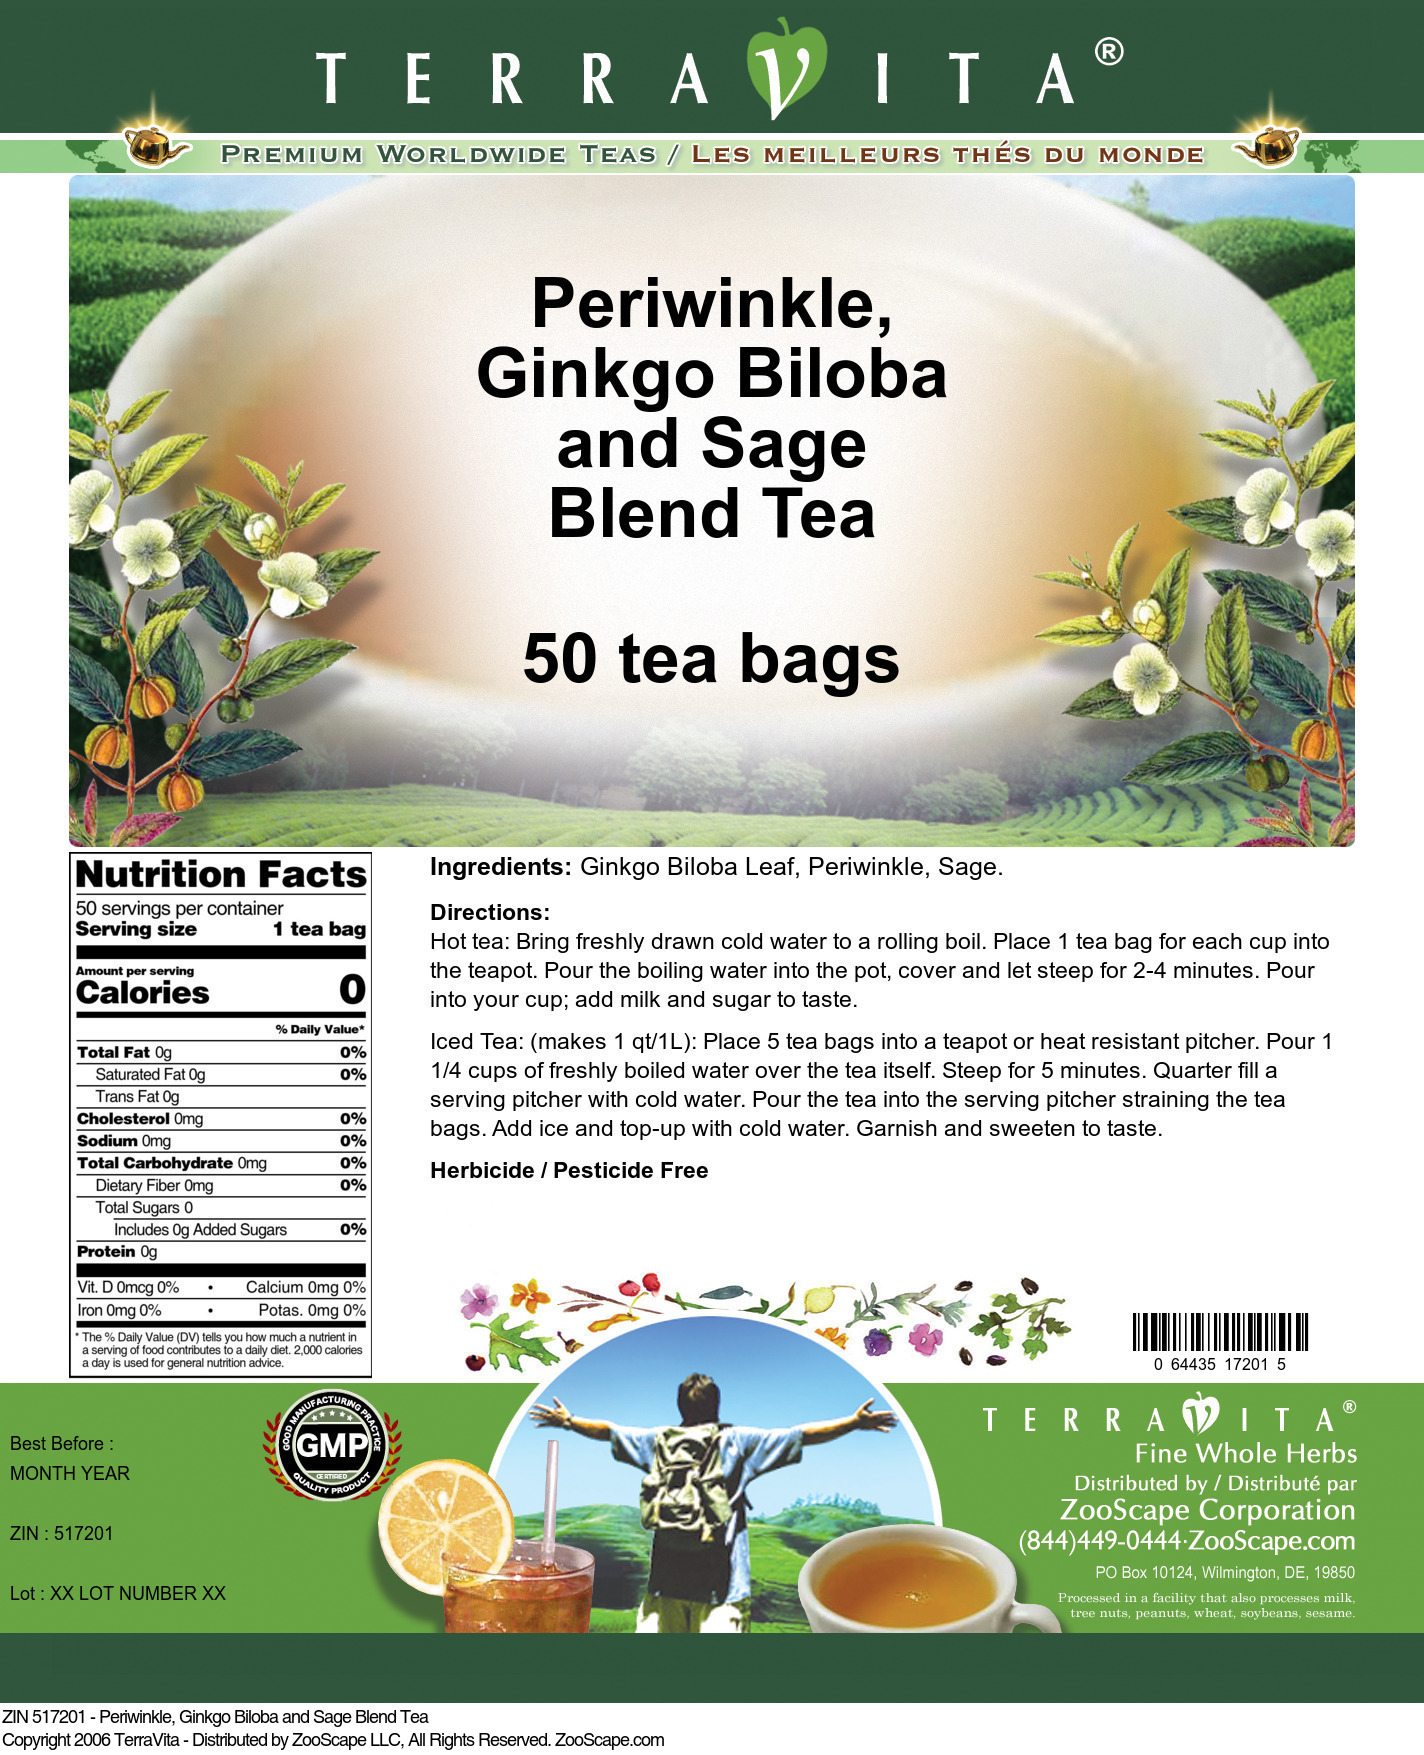 Periwinkle, Ginkgo Biloba and Sage Blend Tea - Label